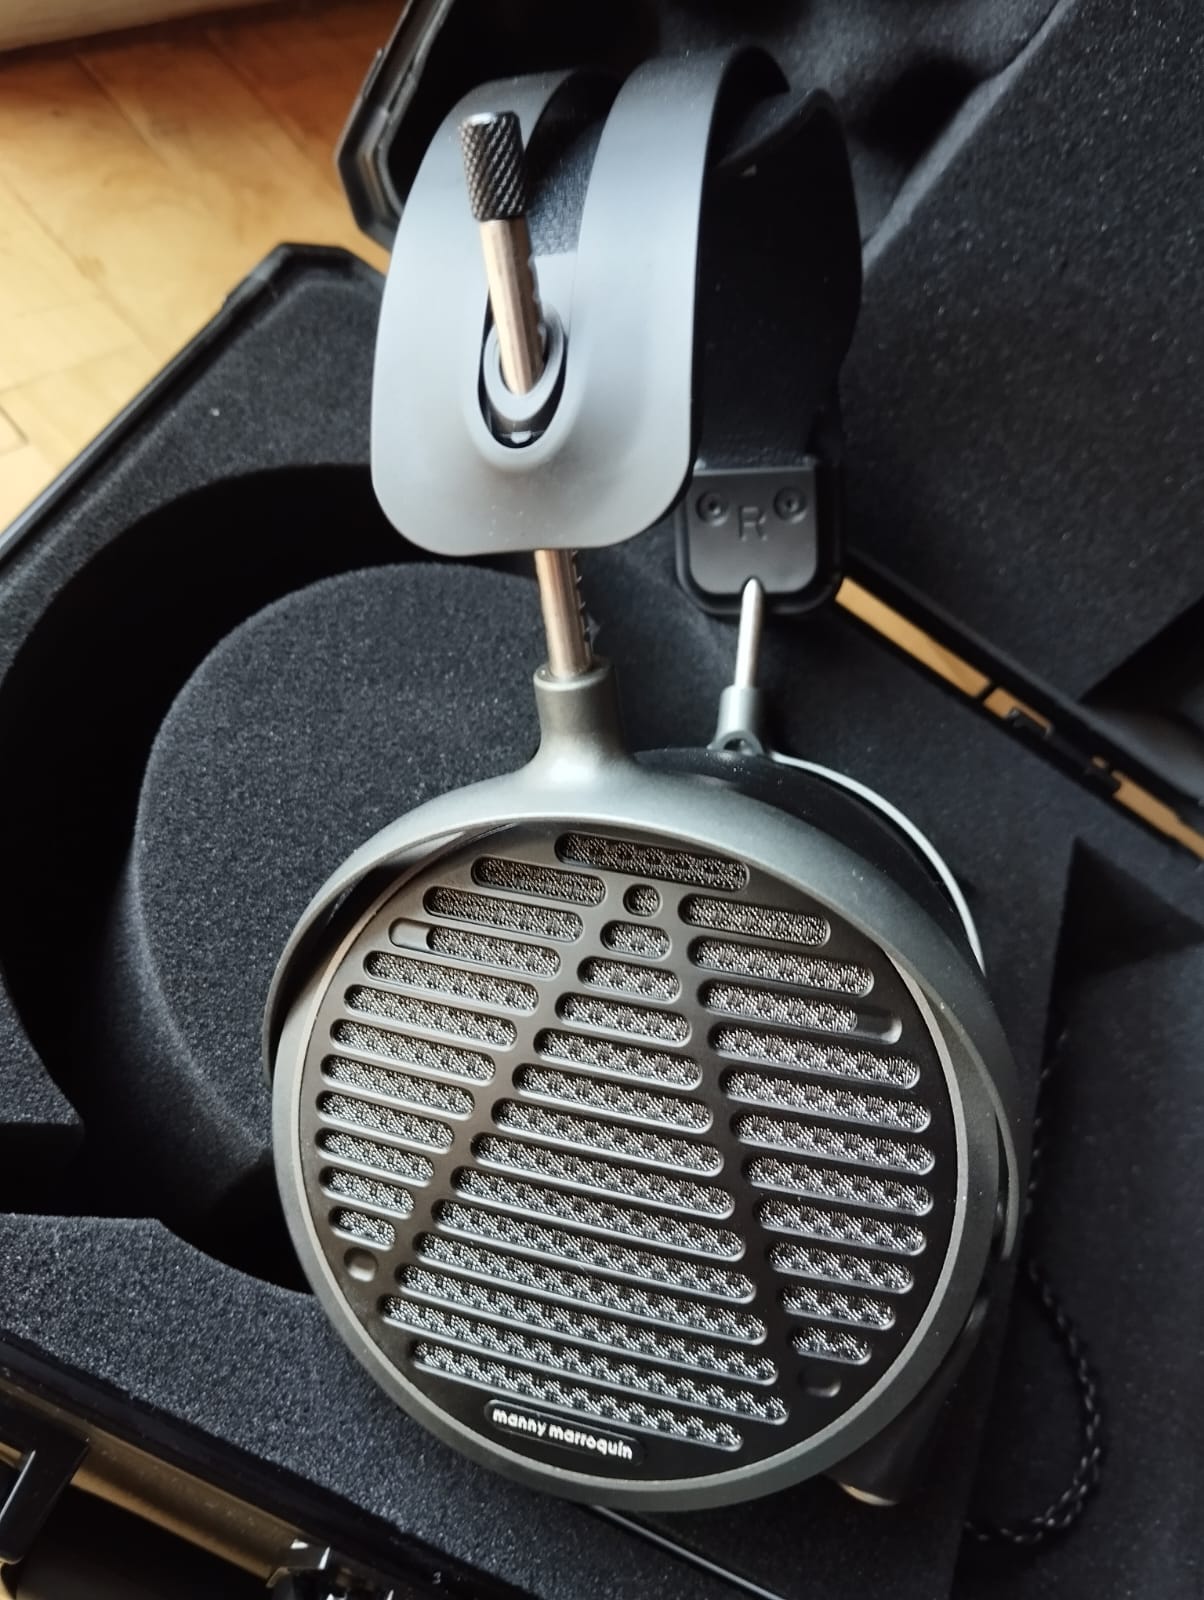 Audeze MM-500 Planar Magnetic Headphones (Preowned)